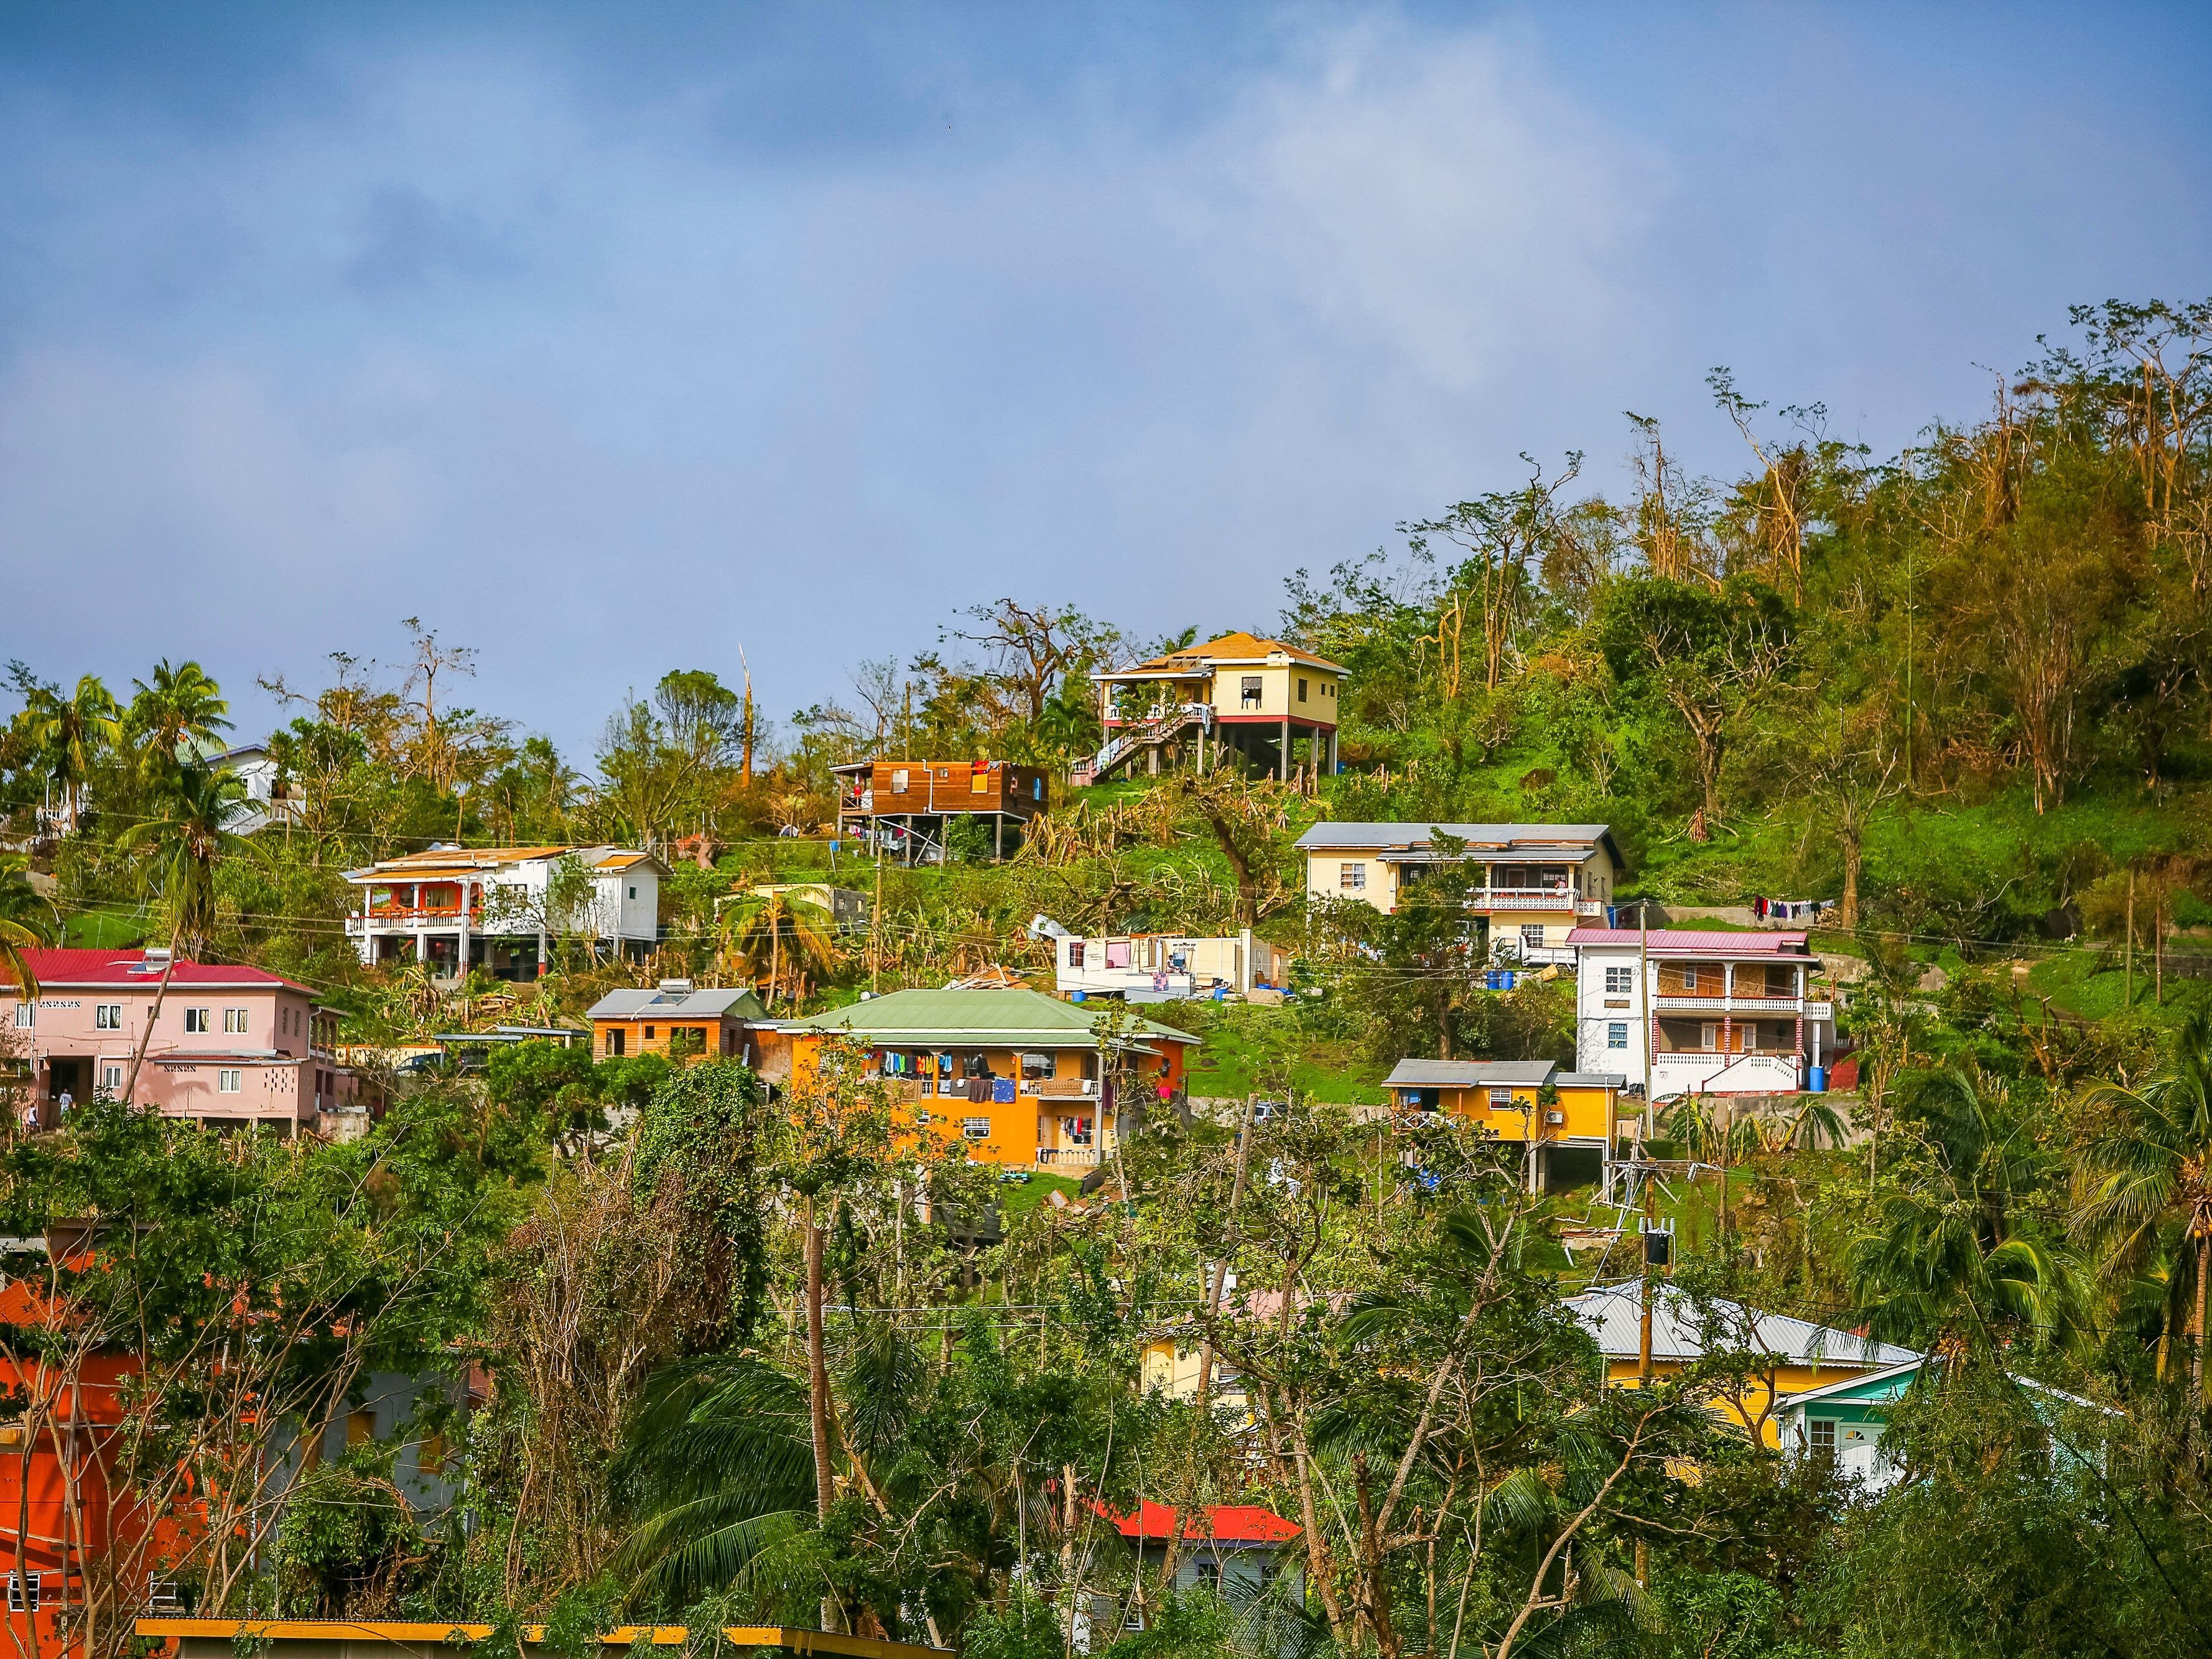 Hurricane Beryl heads towards Jamaica after ripping through south-east Caribbean